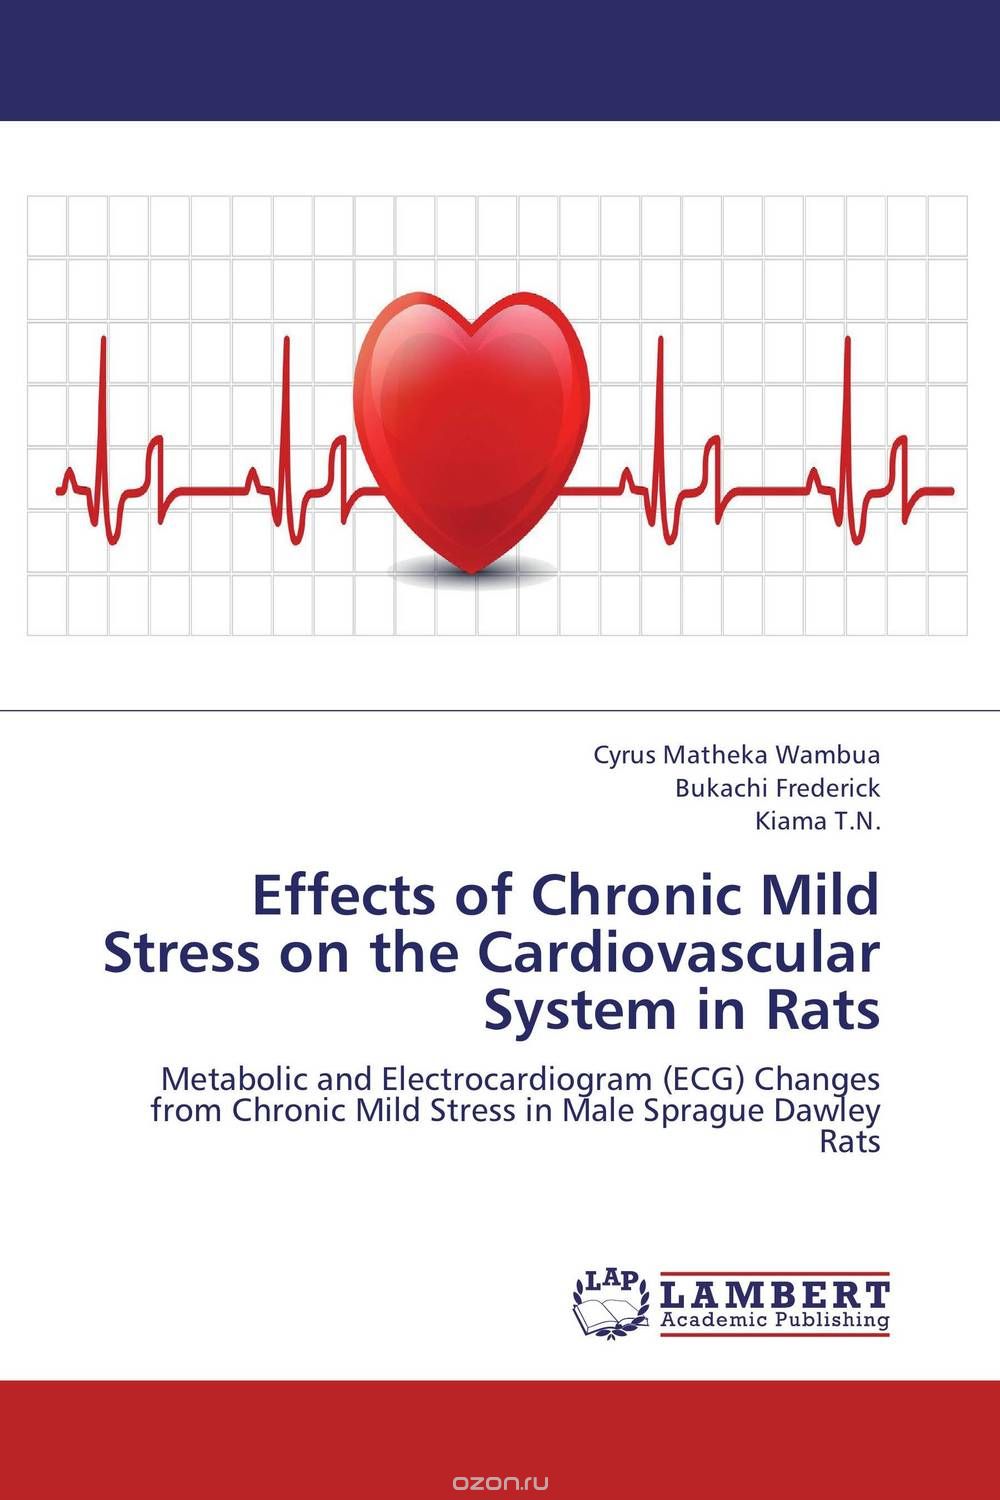 Скачать книгу "Effects of Chronic Mild Stress on the Cardiovascular System in Rats"